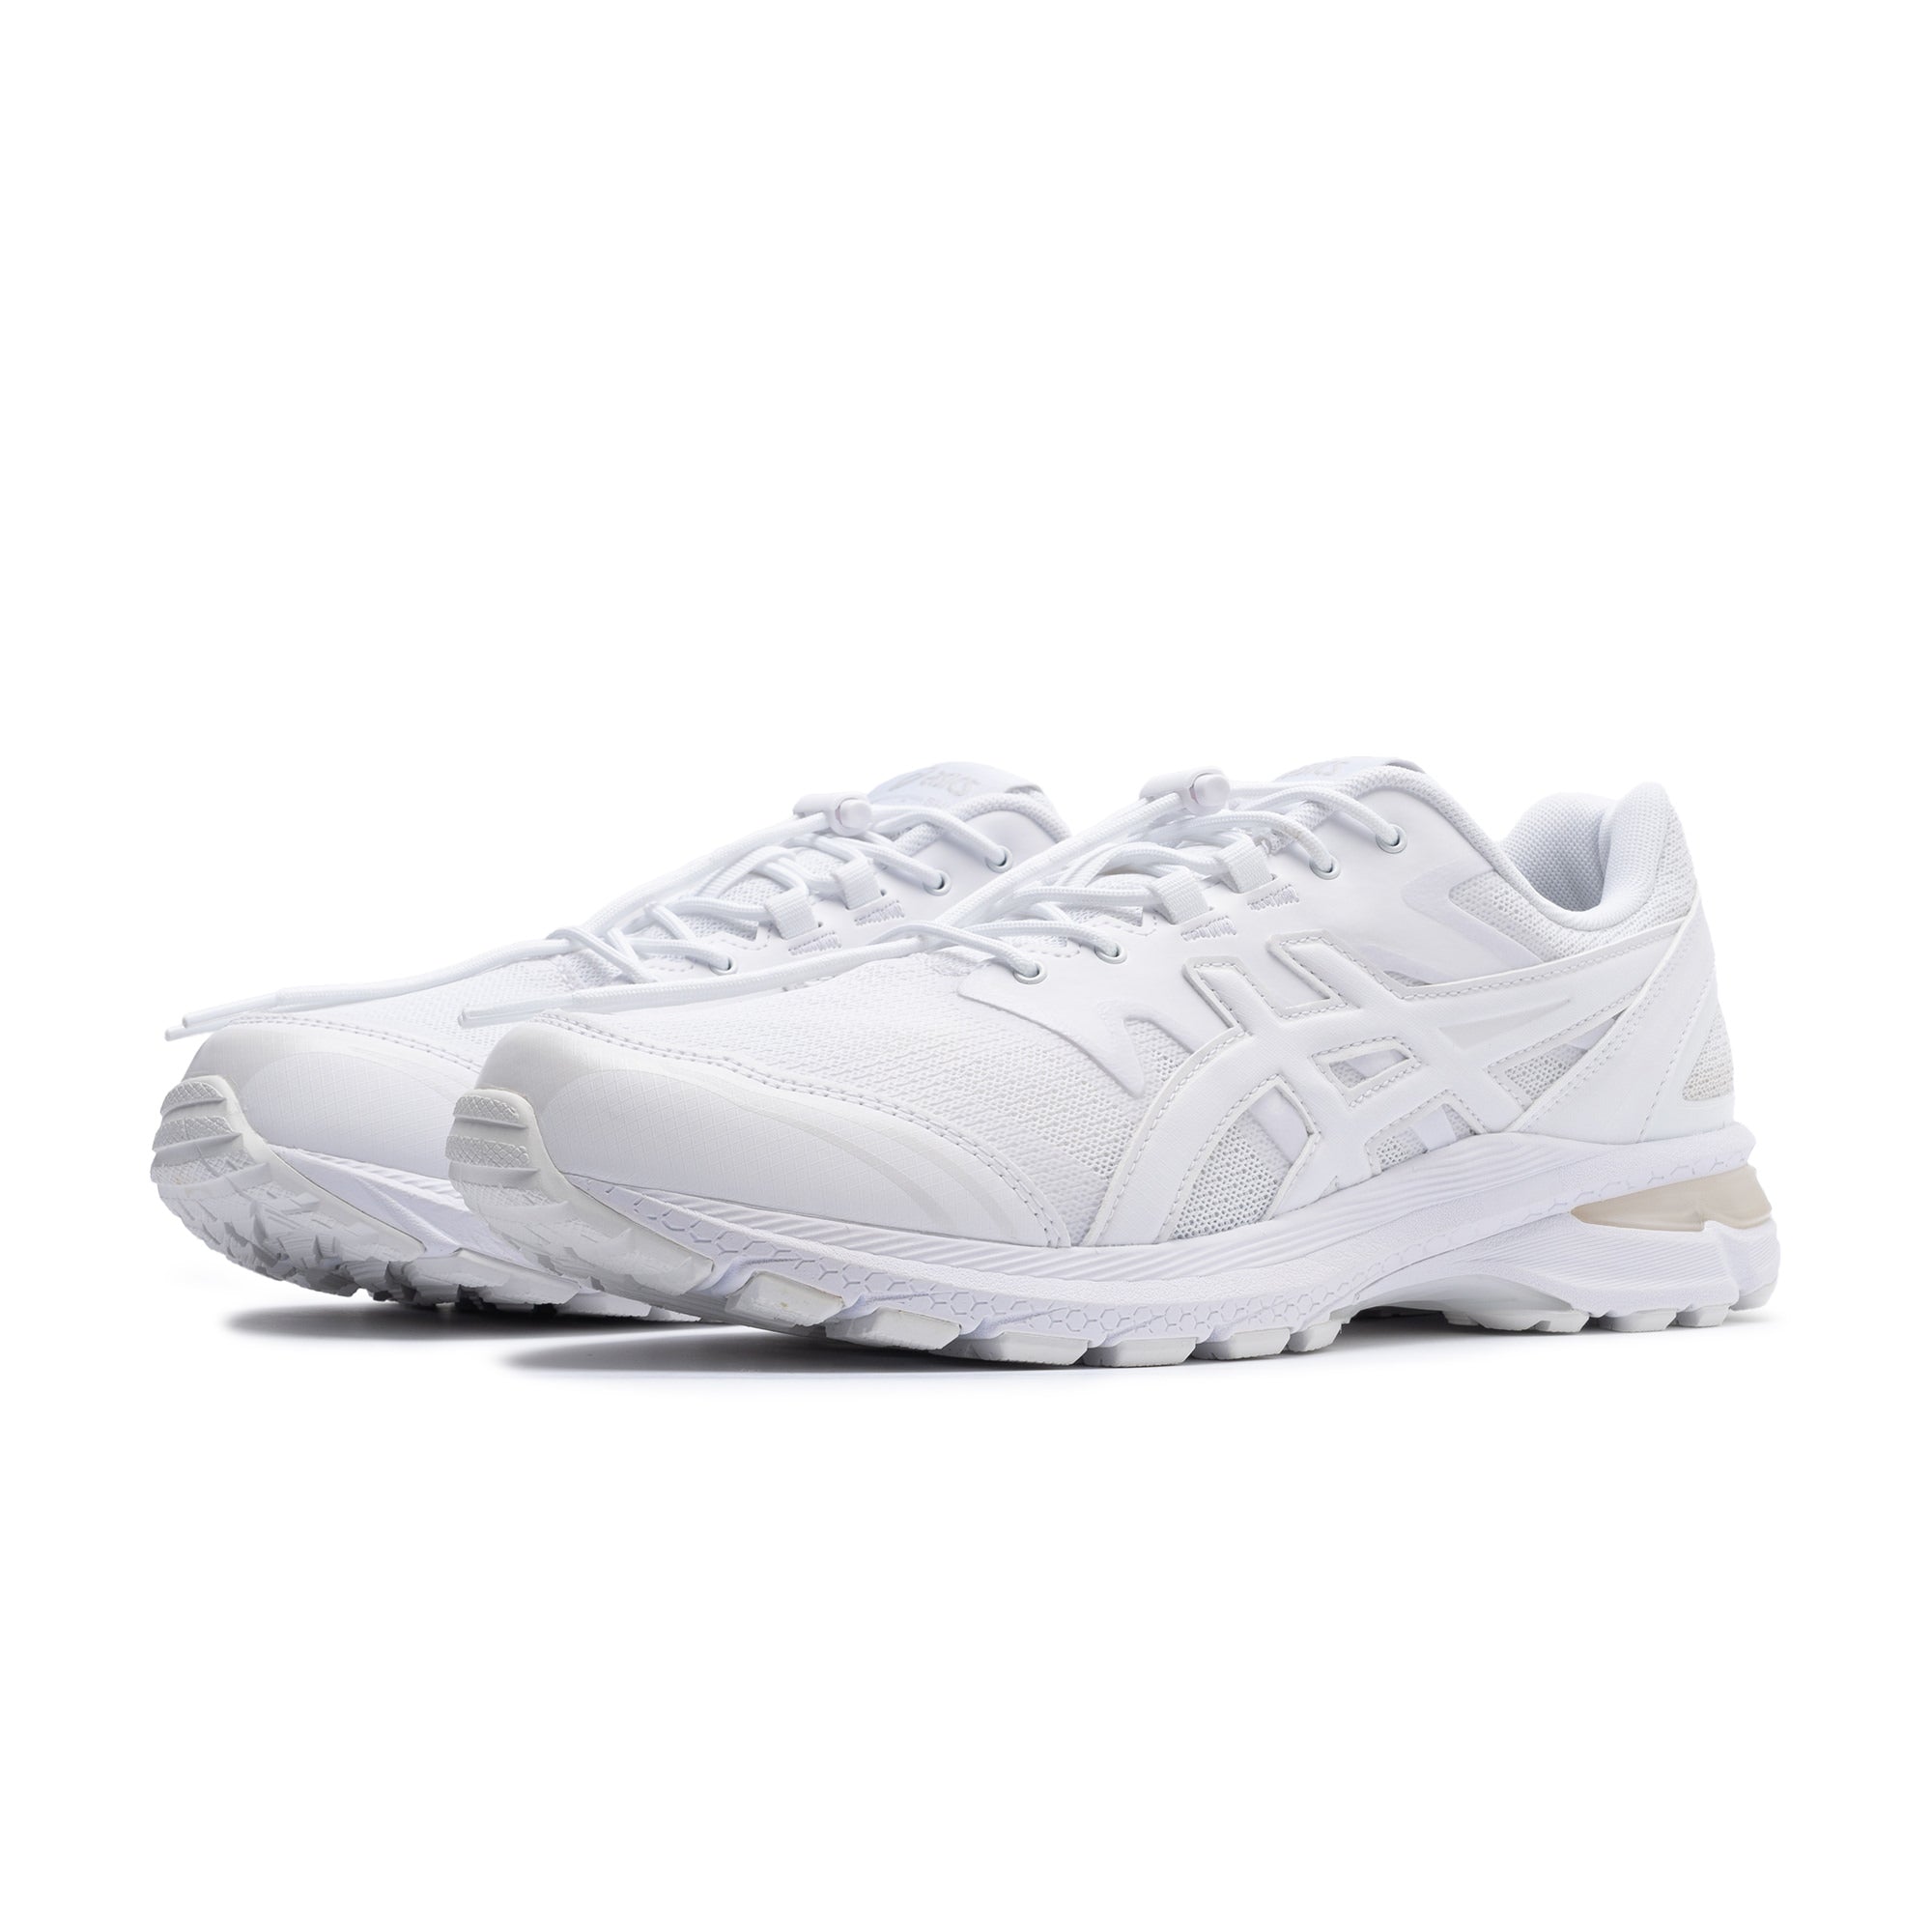 New Balance 520 Navy Gum Navy White Gum Marathon Running Shoes Sneakers U520AK